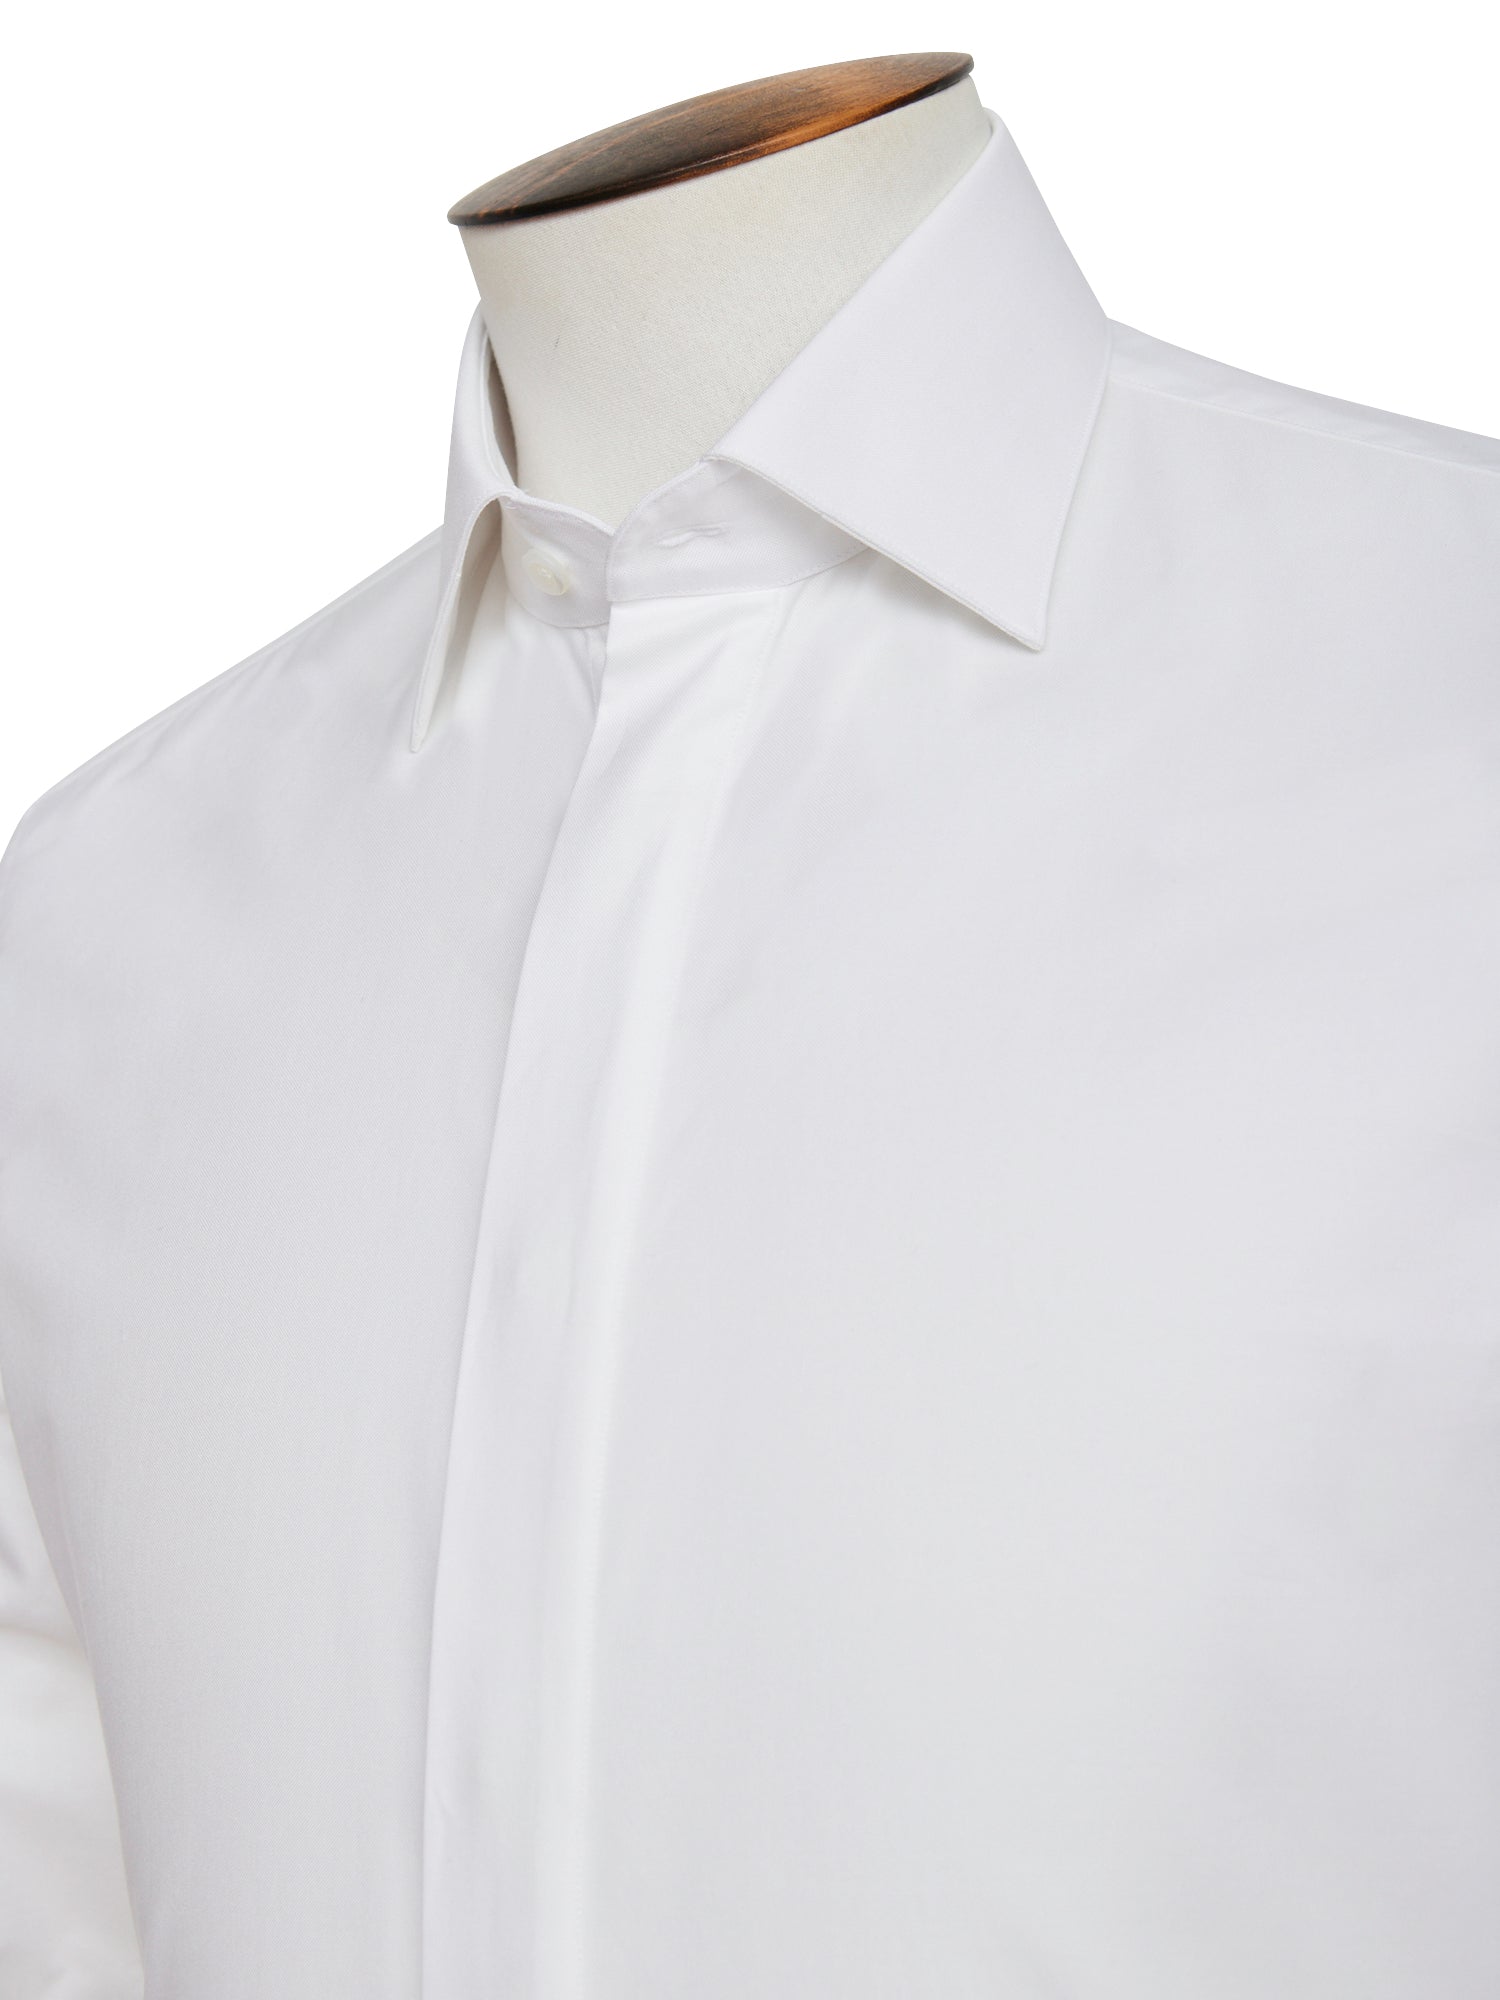 Rossini Cocktail Shirt - White Fine Twill